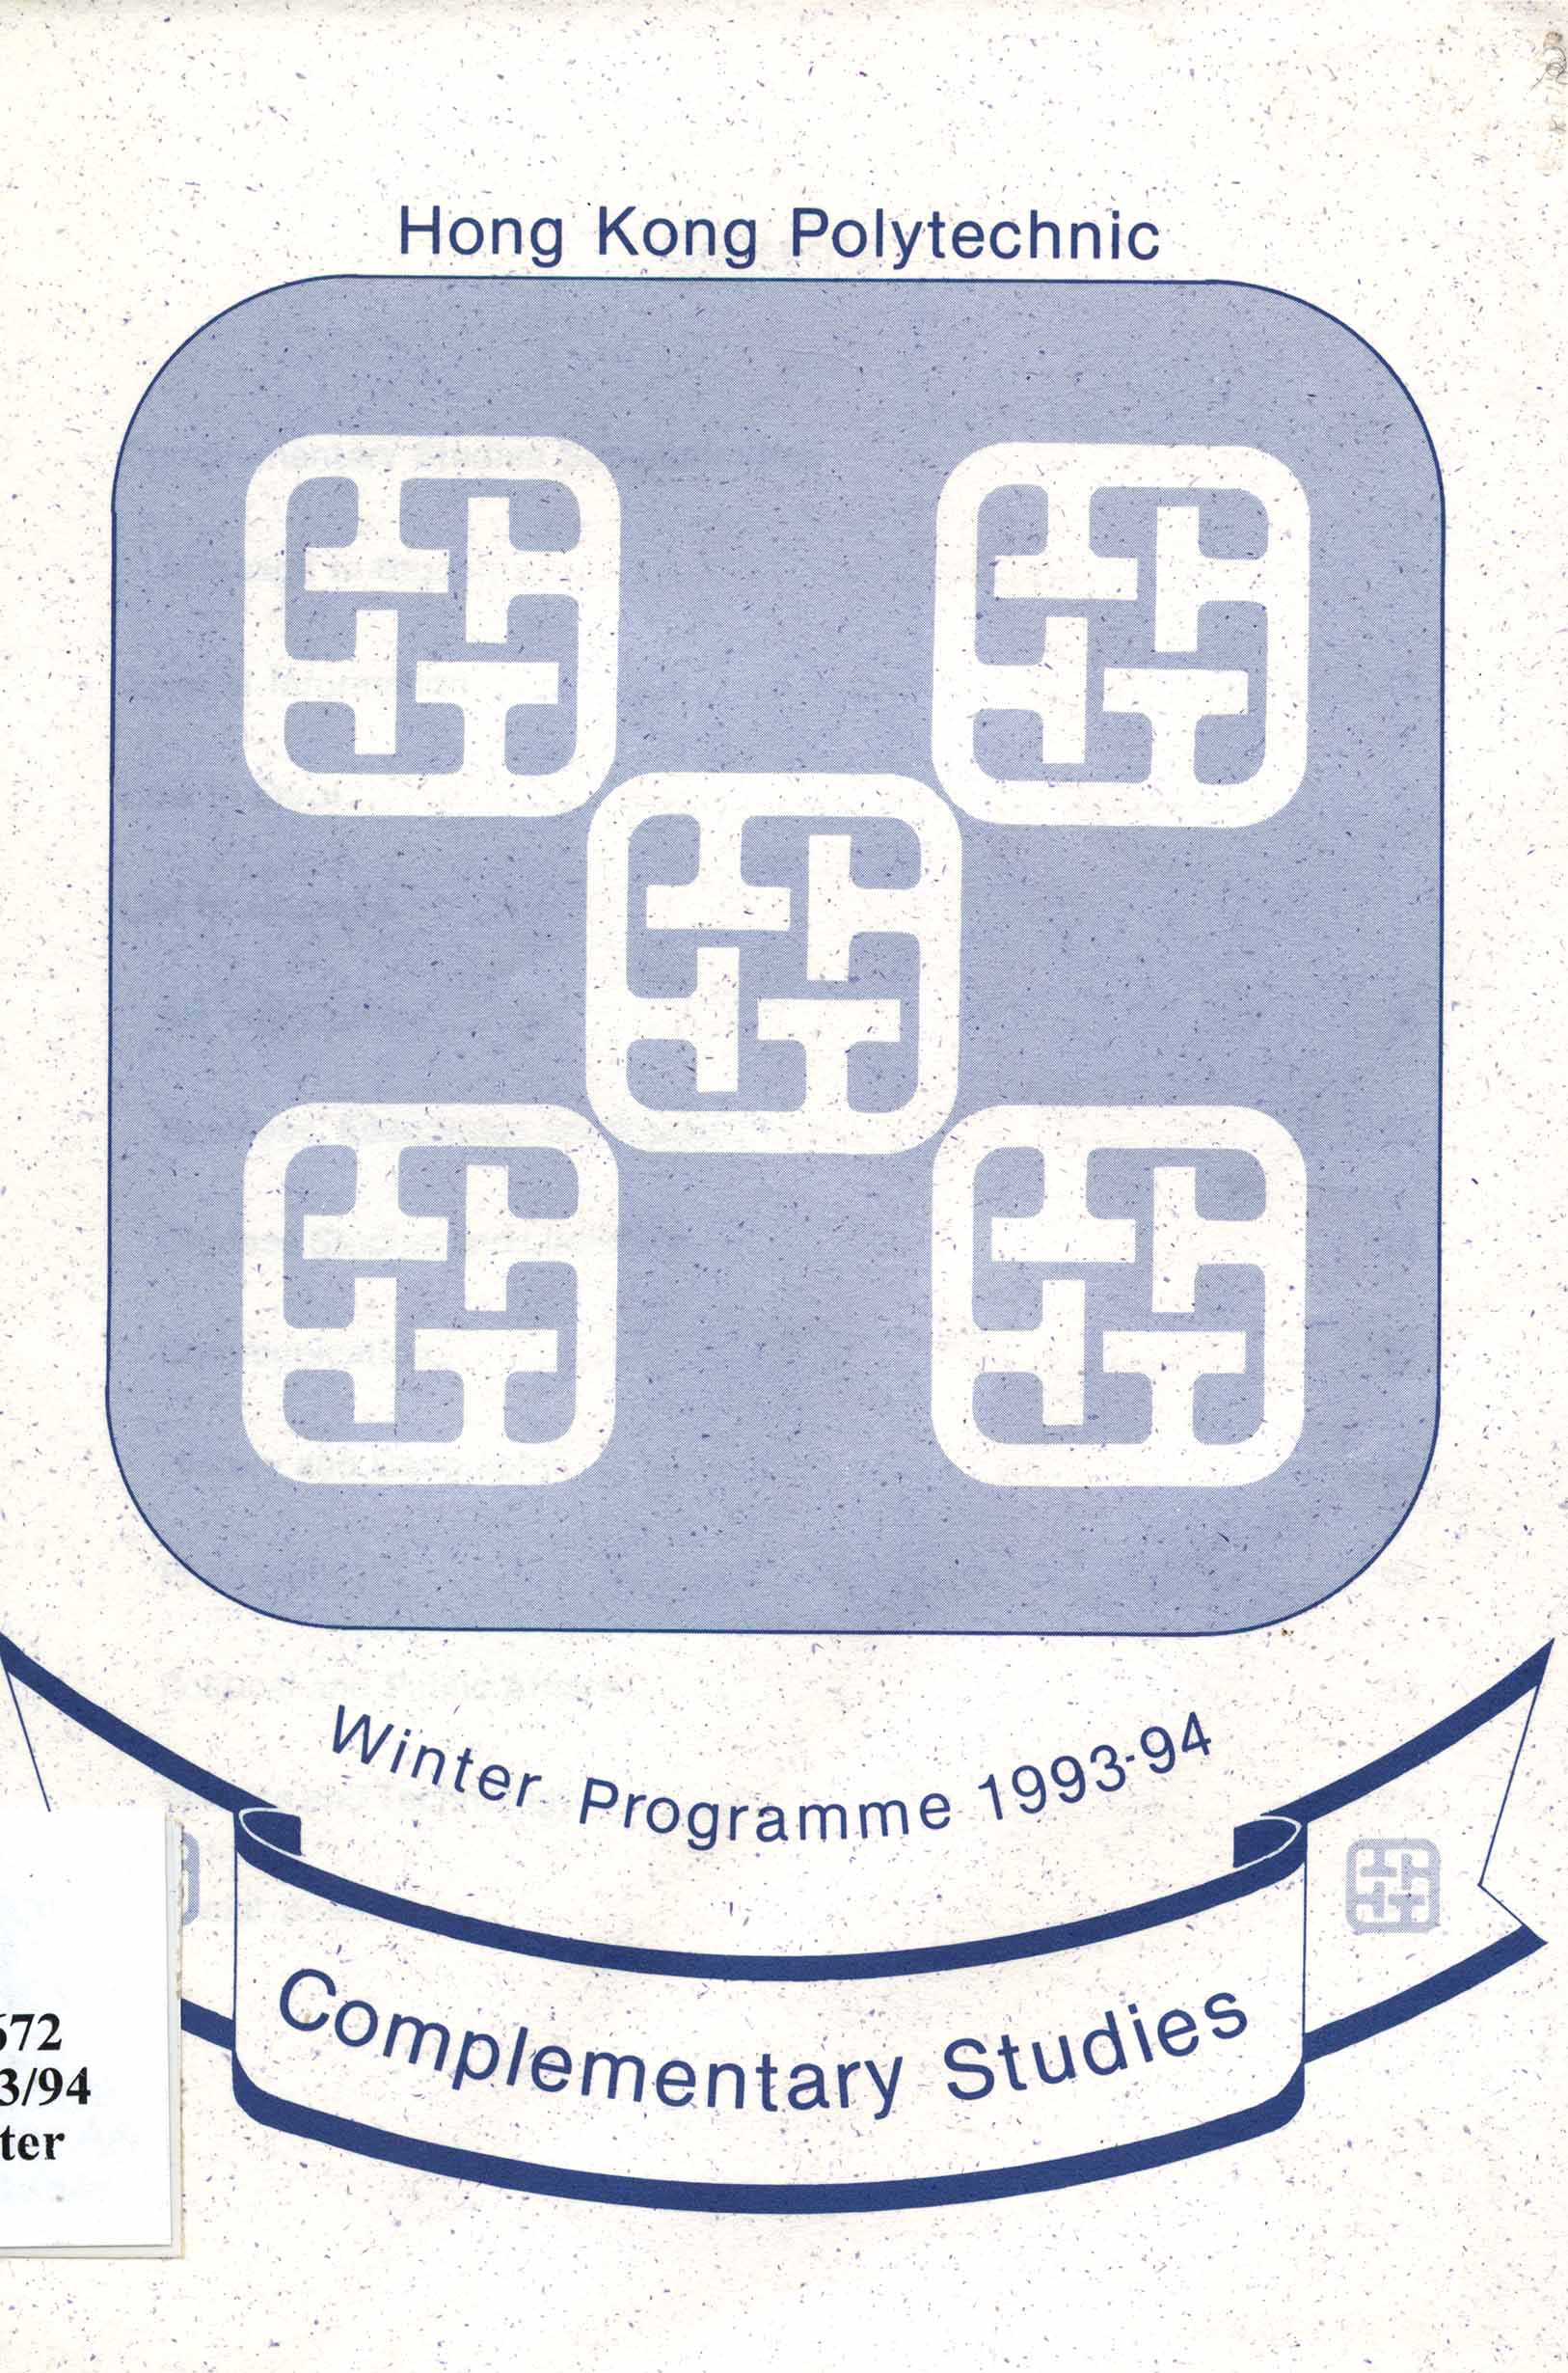 Complementary studies winter programme 1993-94